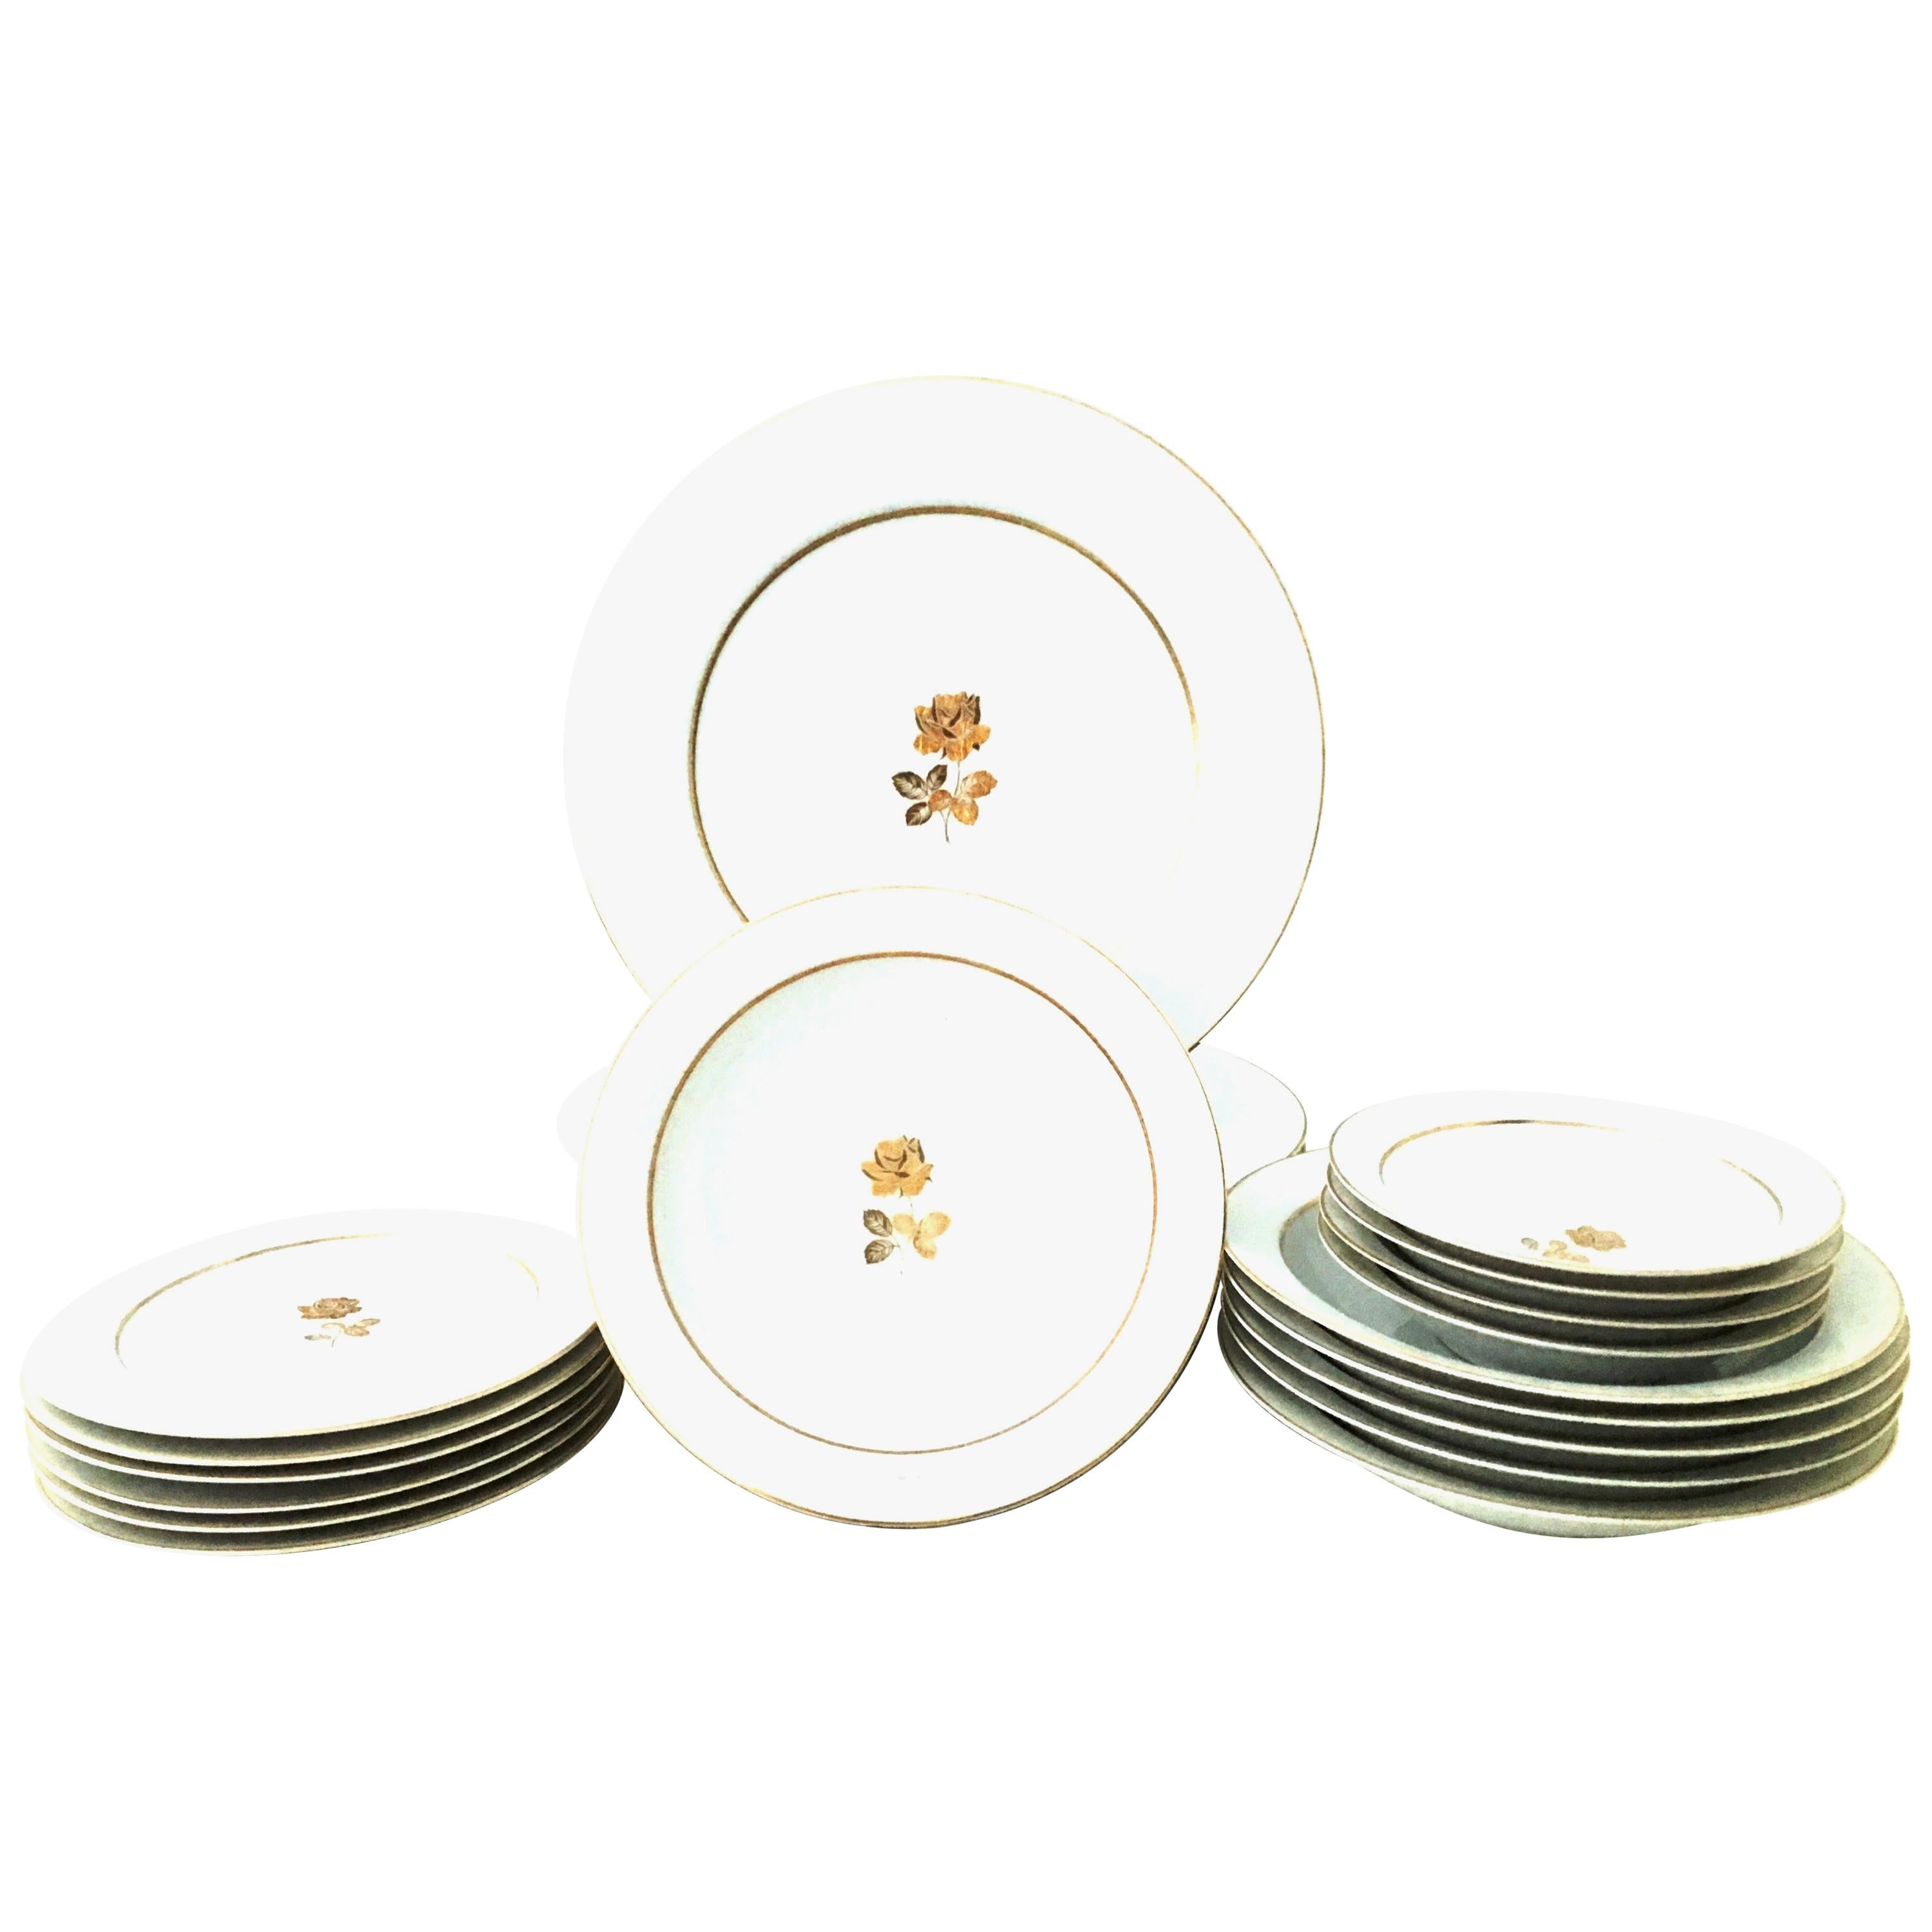 Mid-20th century Japanese Porcelain and 22-karat gold dinnerware 